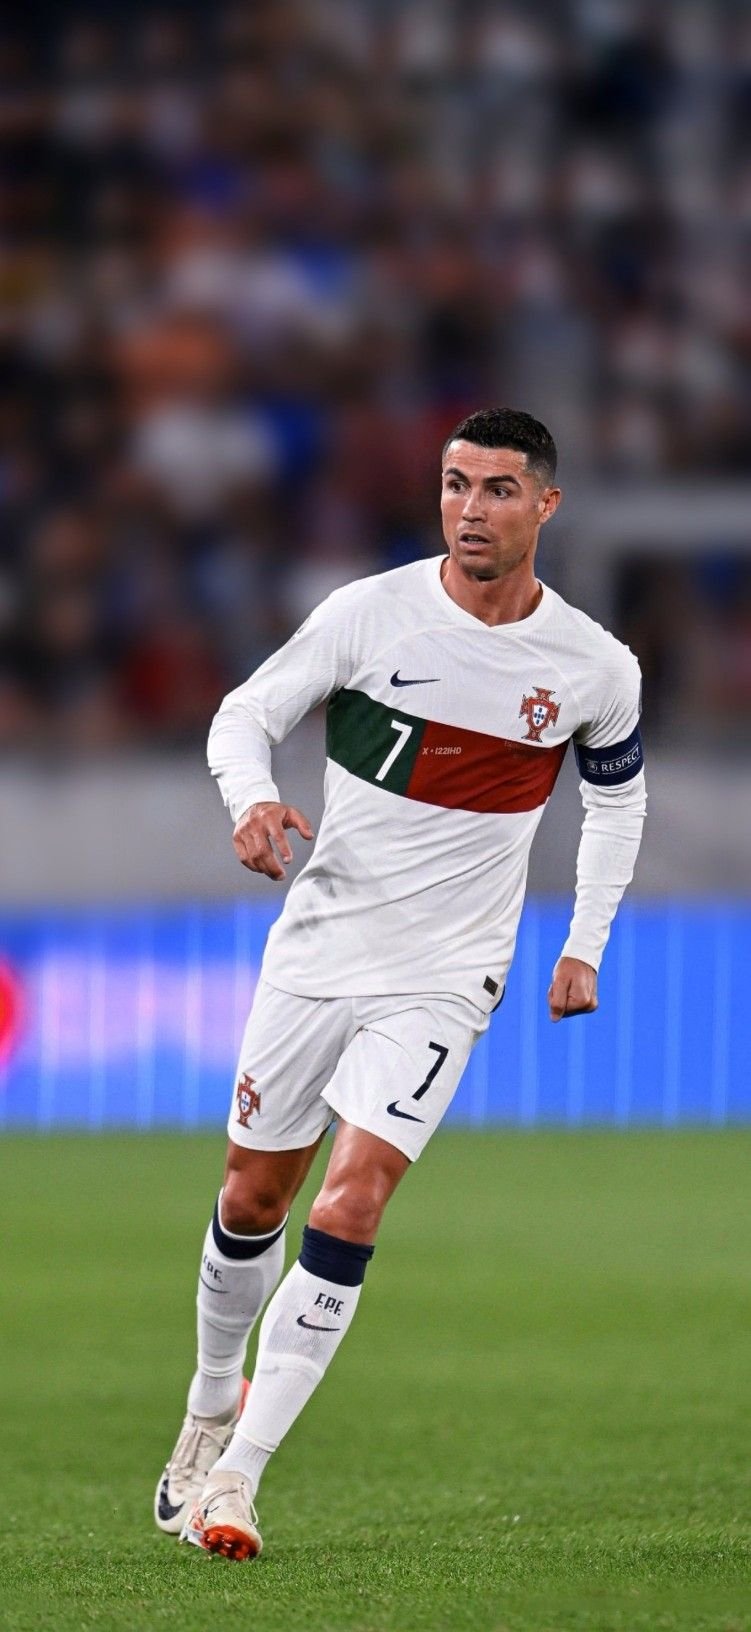 Ronaldo No Shirt Wallpaper Hd